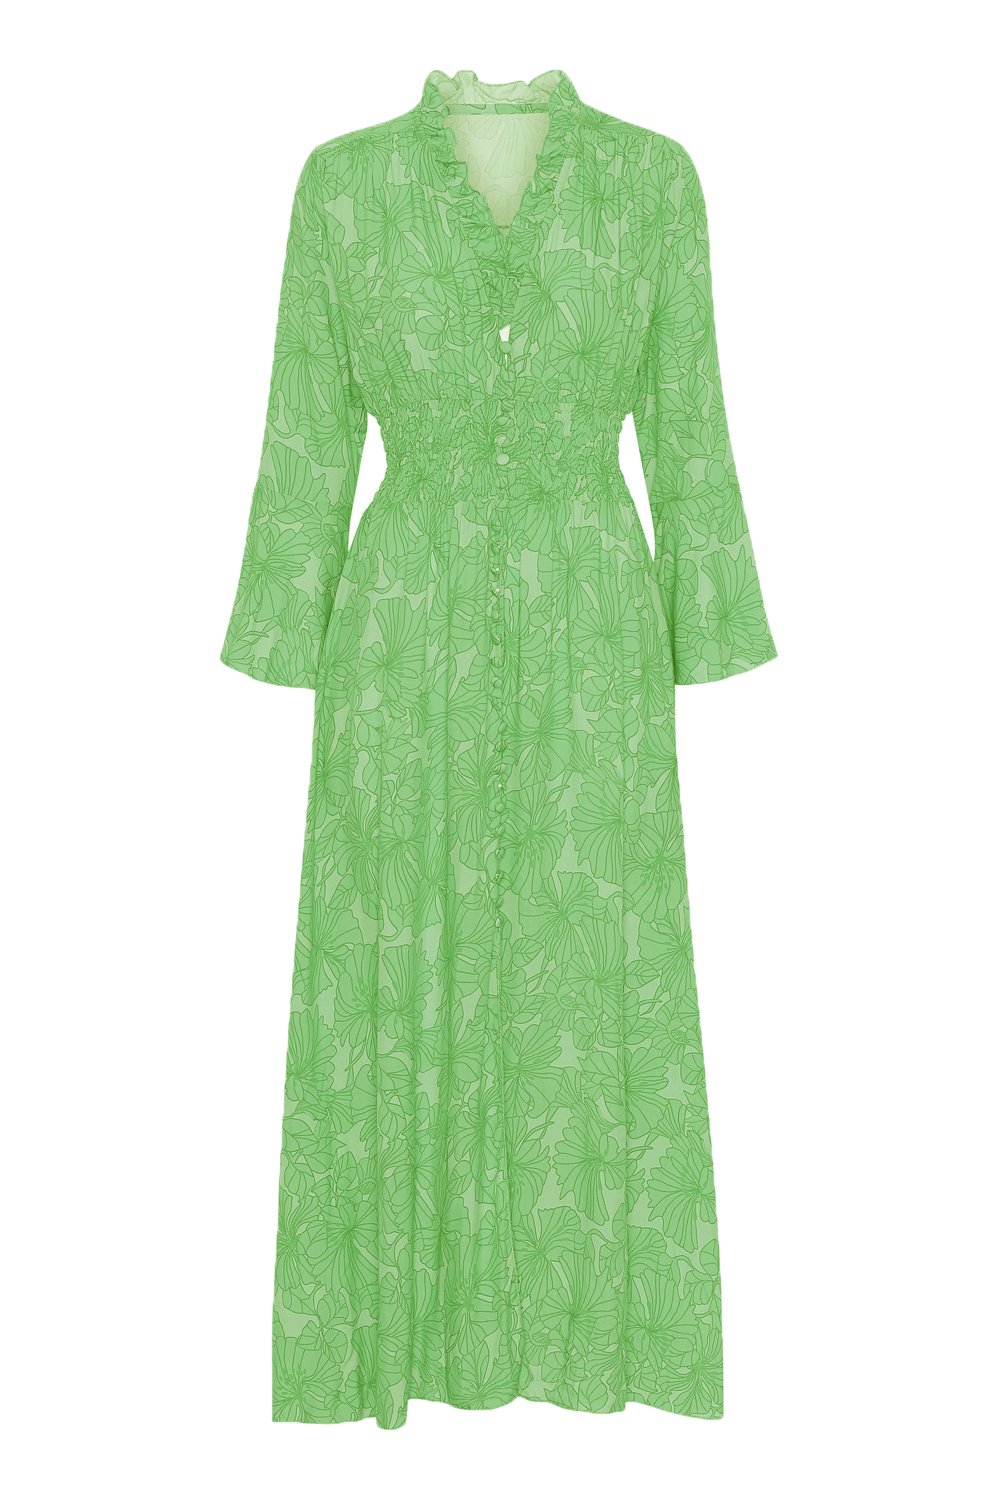 Sally Long Dress Lime Green Printed - Sample